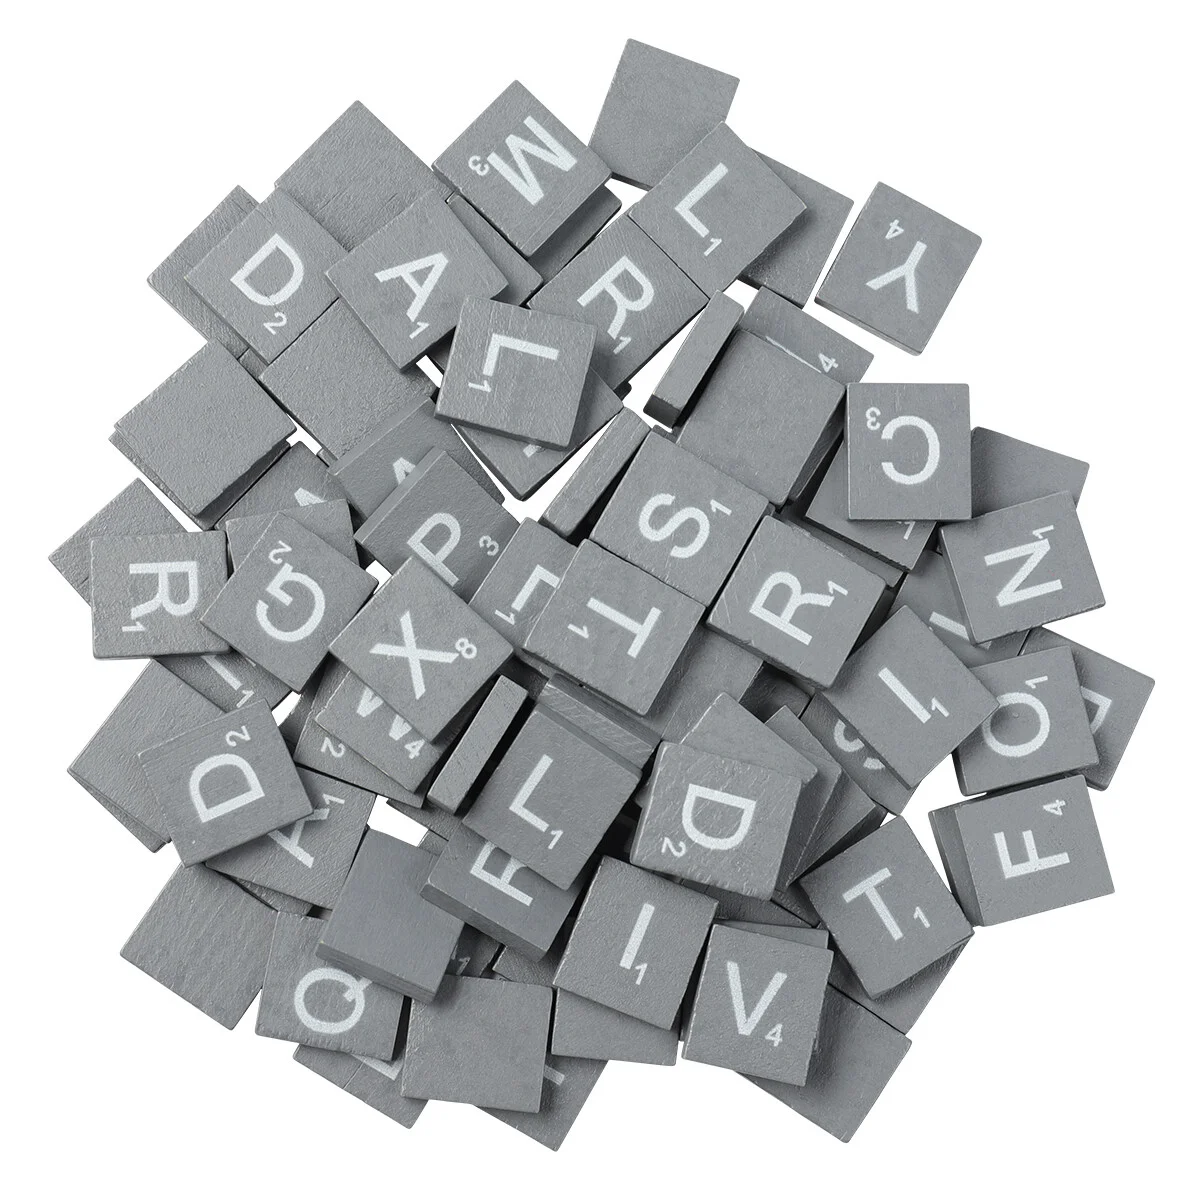 

100pcs Wood Letter Tiles 26 Alphabet Capital Letters Puzzle for Kids DIY Crafts Pendants Spelling Educational Toys Grey